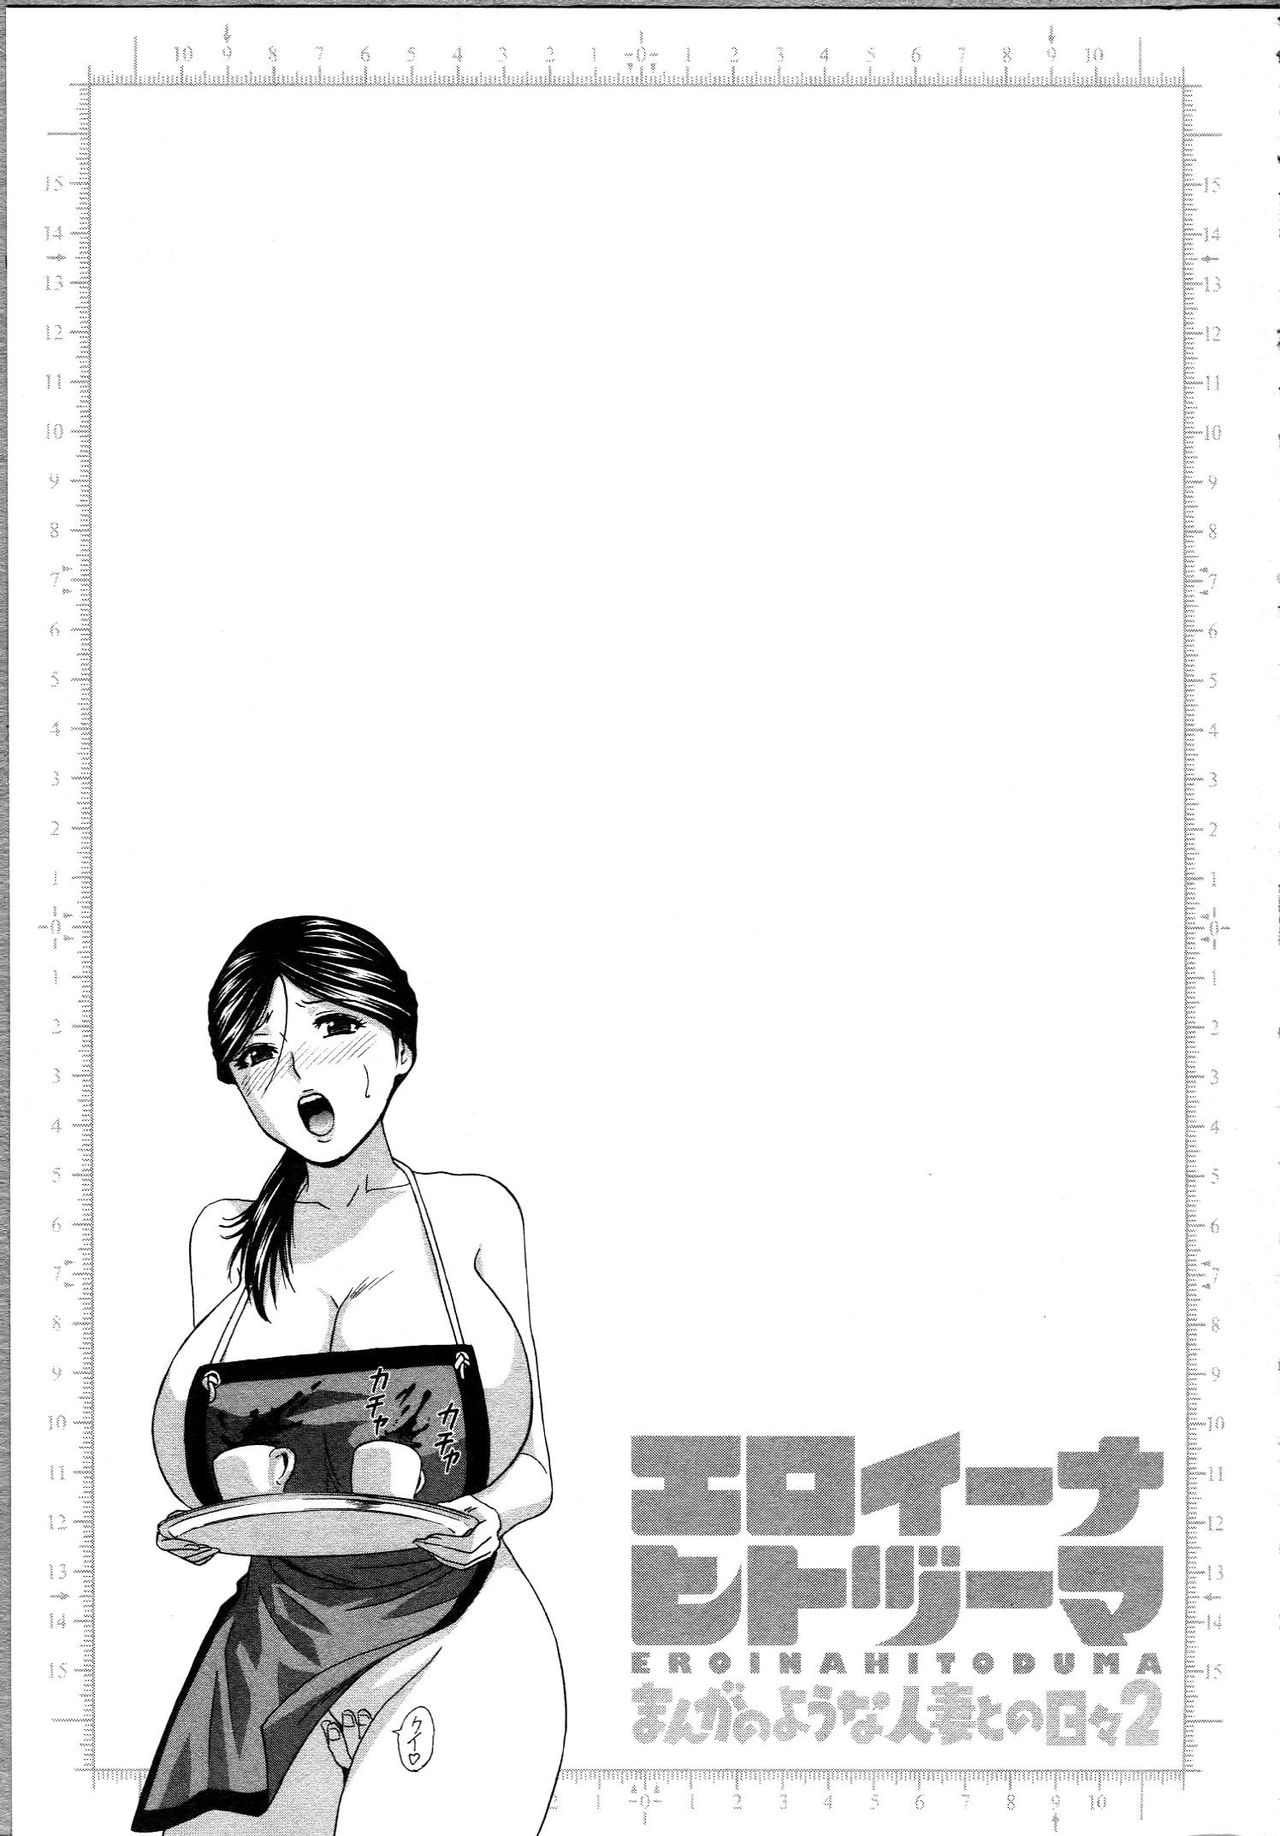 [Hidemaru] Eroina Hitoduma - Manga no youna Hitozuma to no Hibi 2 | Life with Married Women Just Like a Manga 2 [German] [SchmidtSST] 115